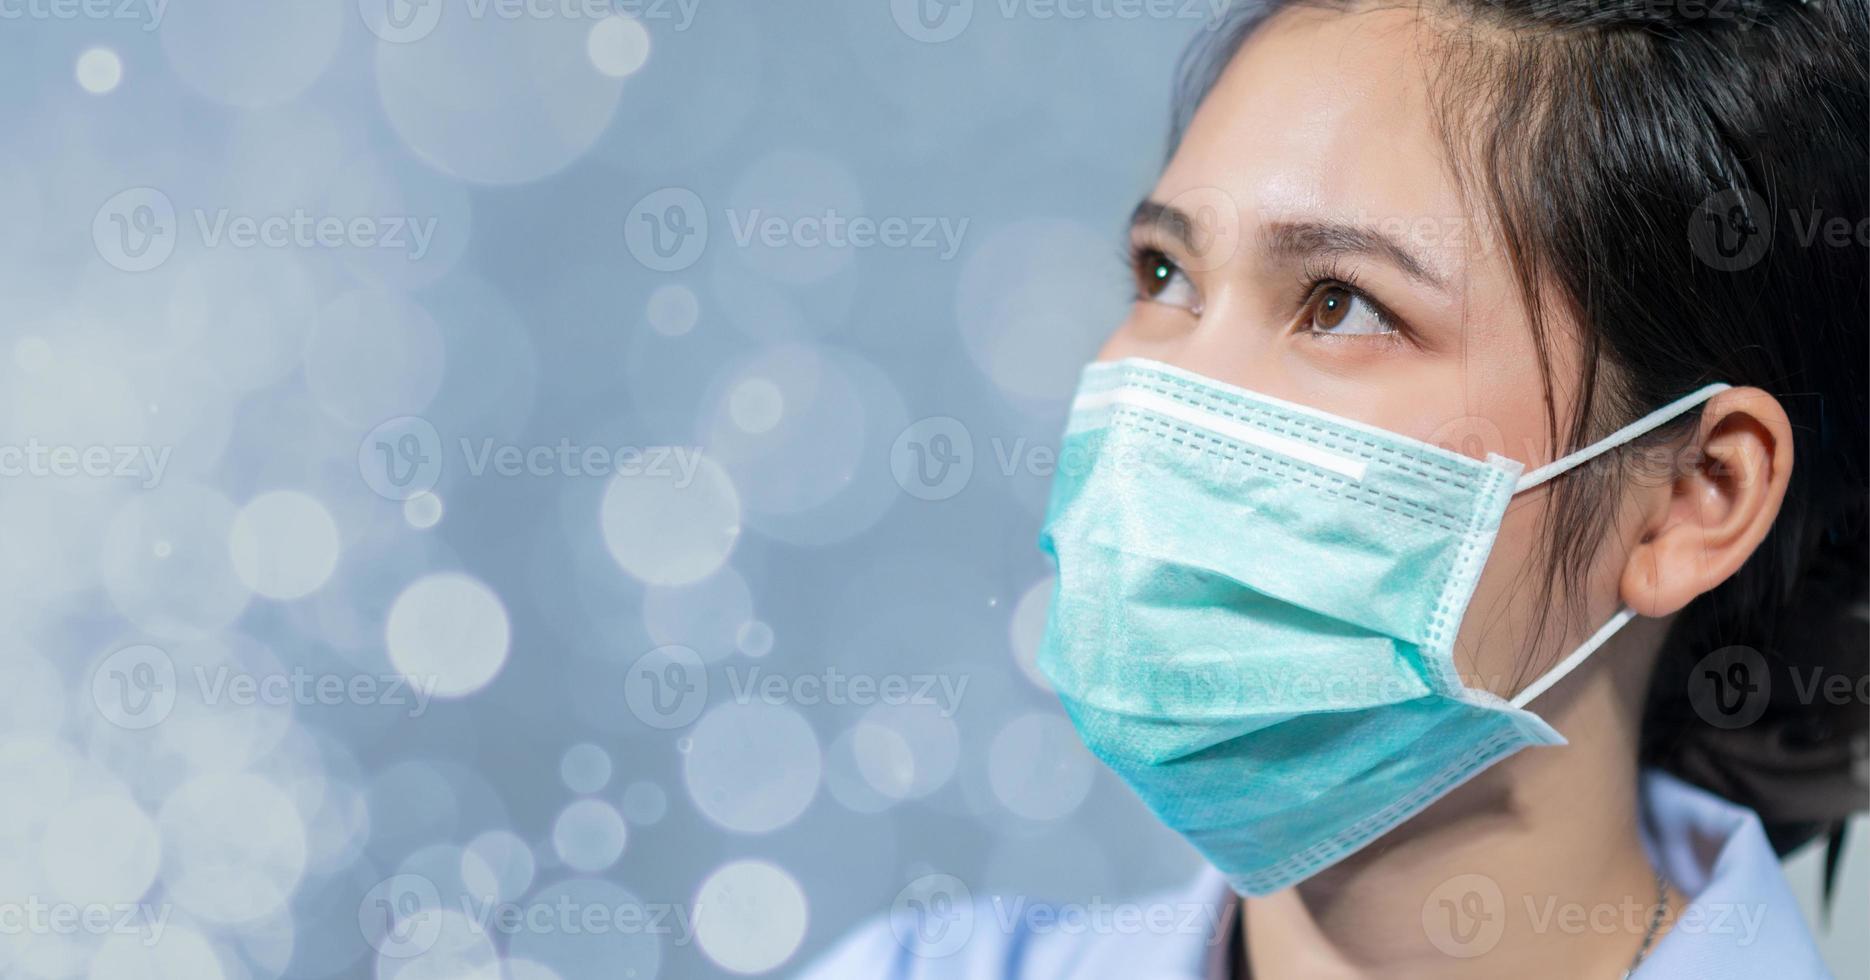 verpleegsters dragen maskers om te beschermen tegen coronavirus covid19 foto